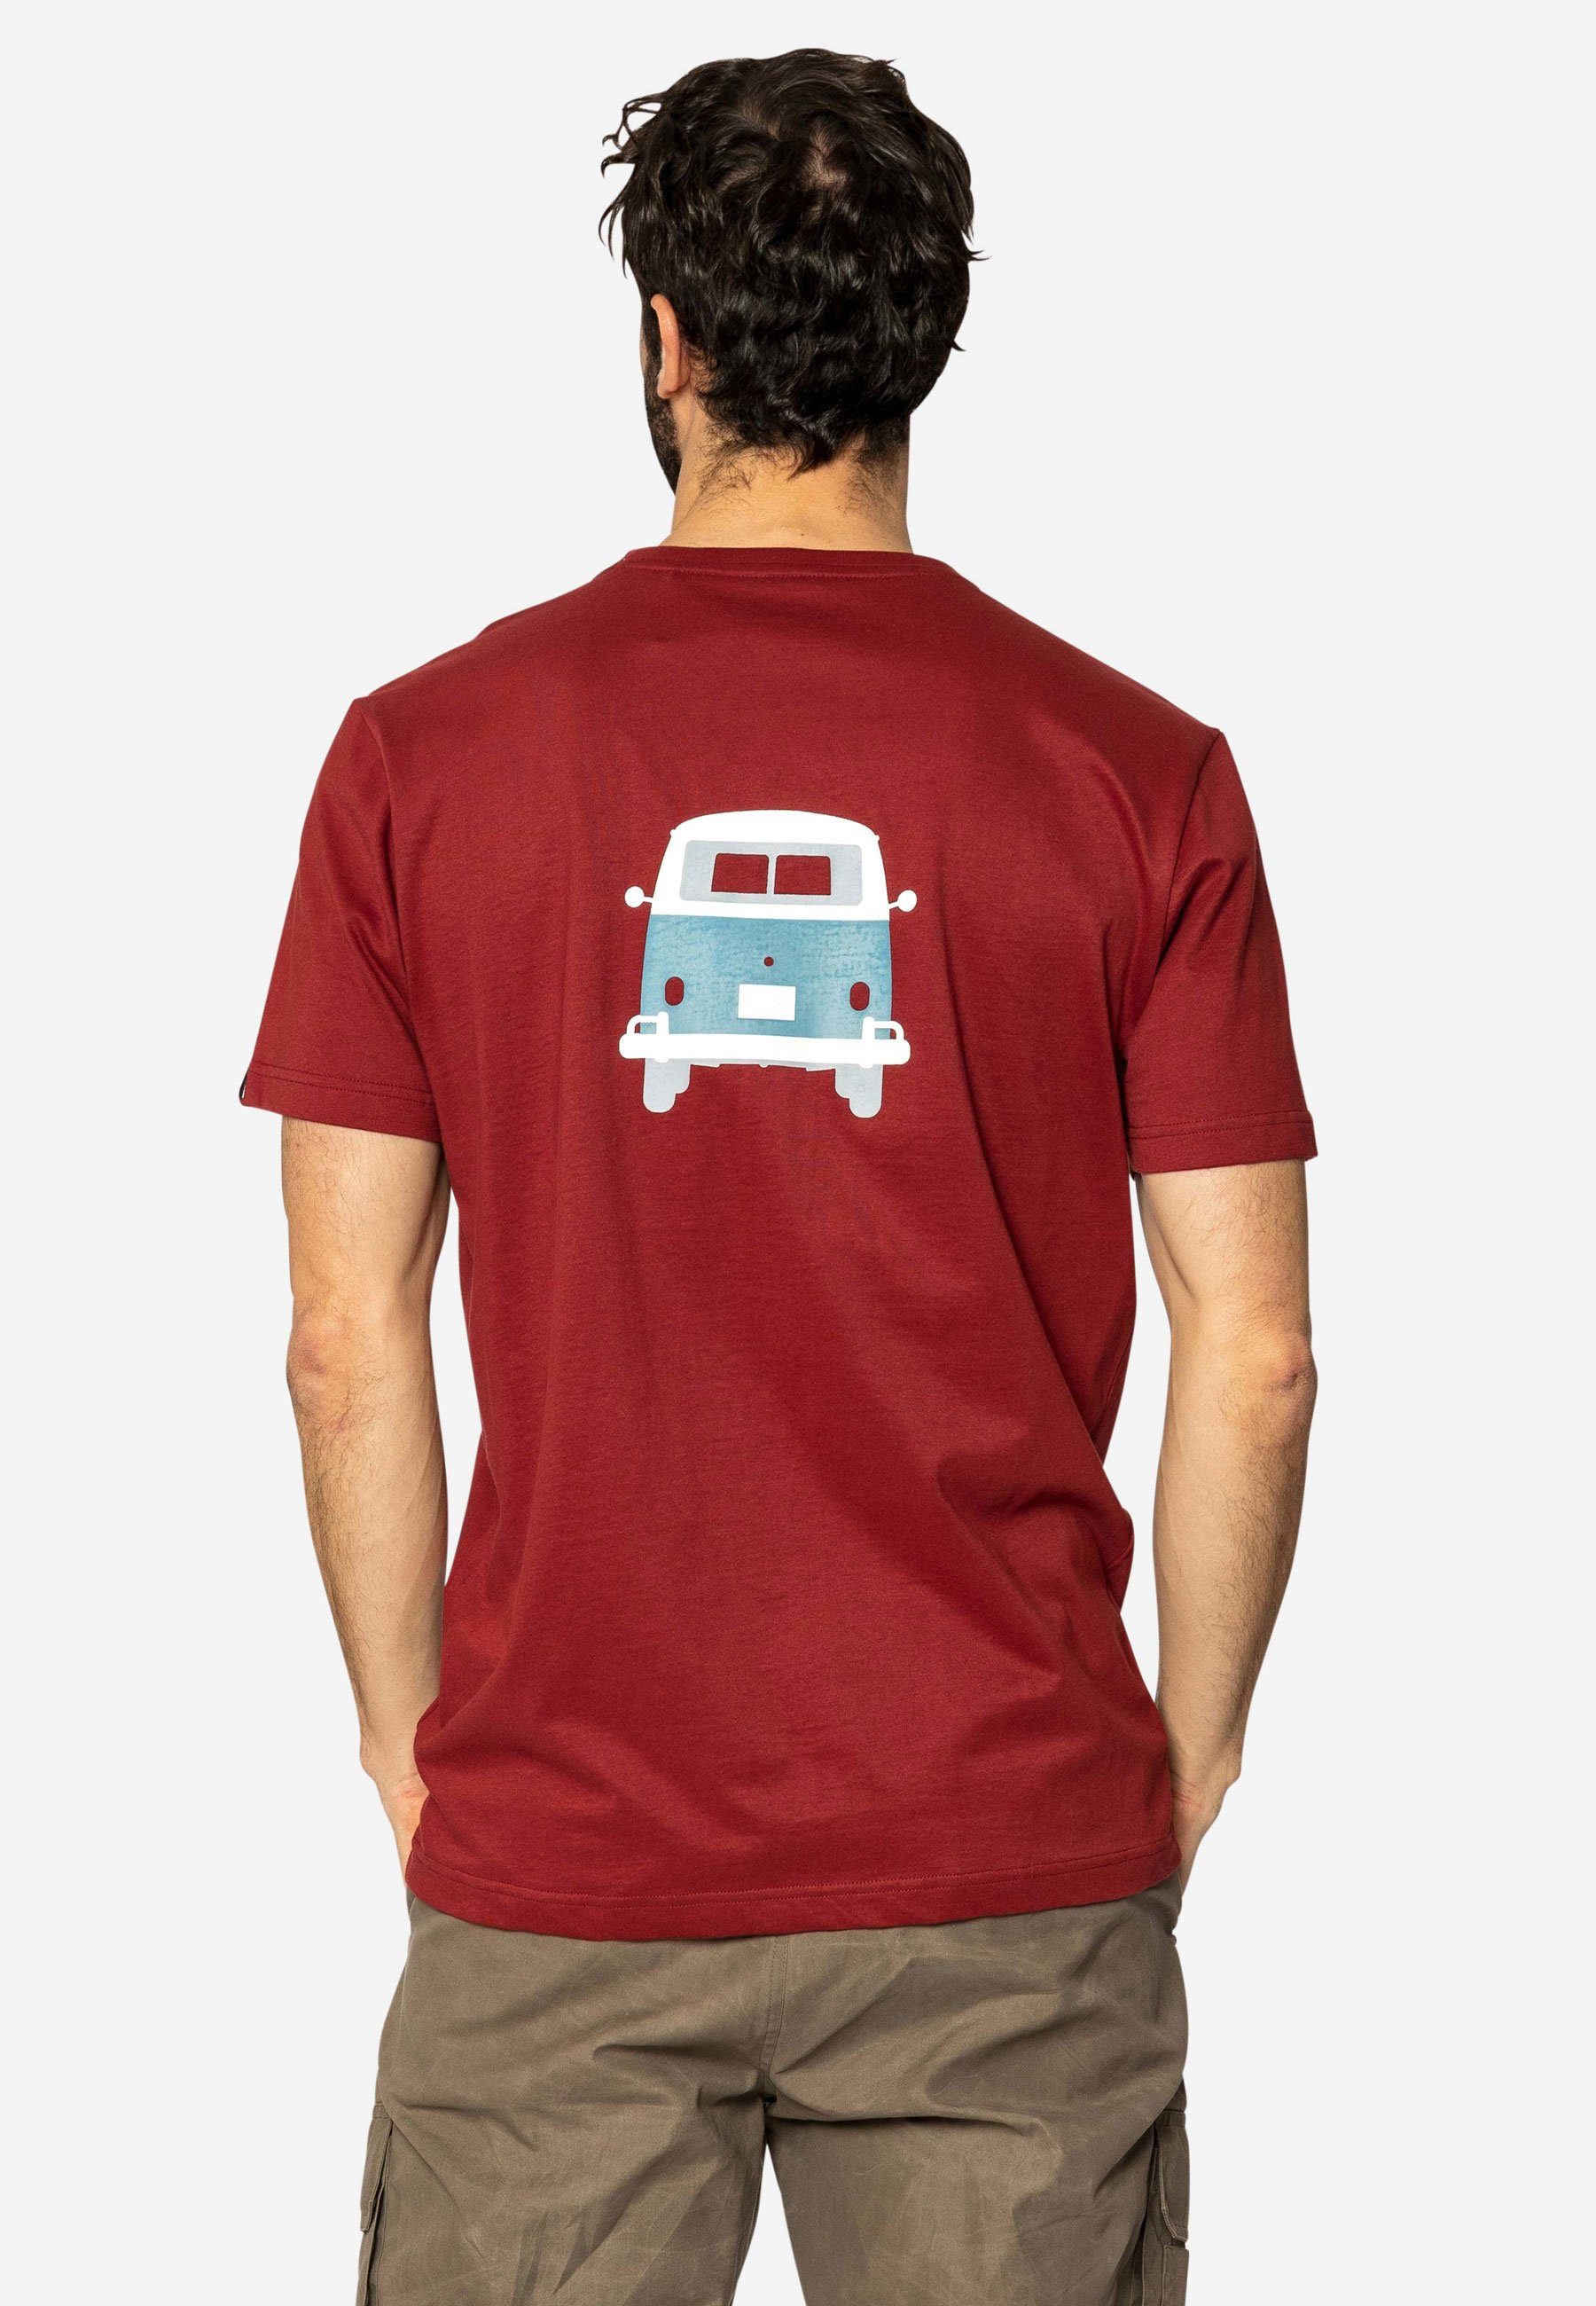 Elkline Print Bulli lizenzierter Methusalem Rücken T-Shirt Brust syrahred VW